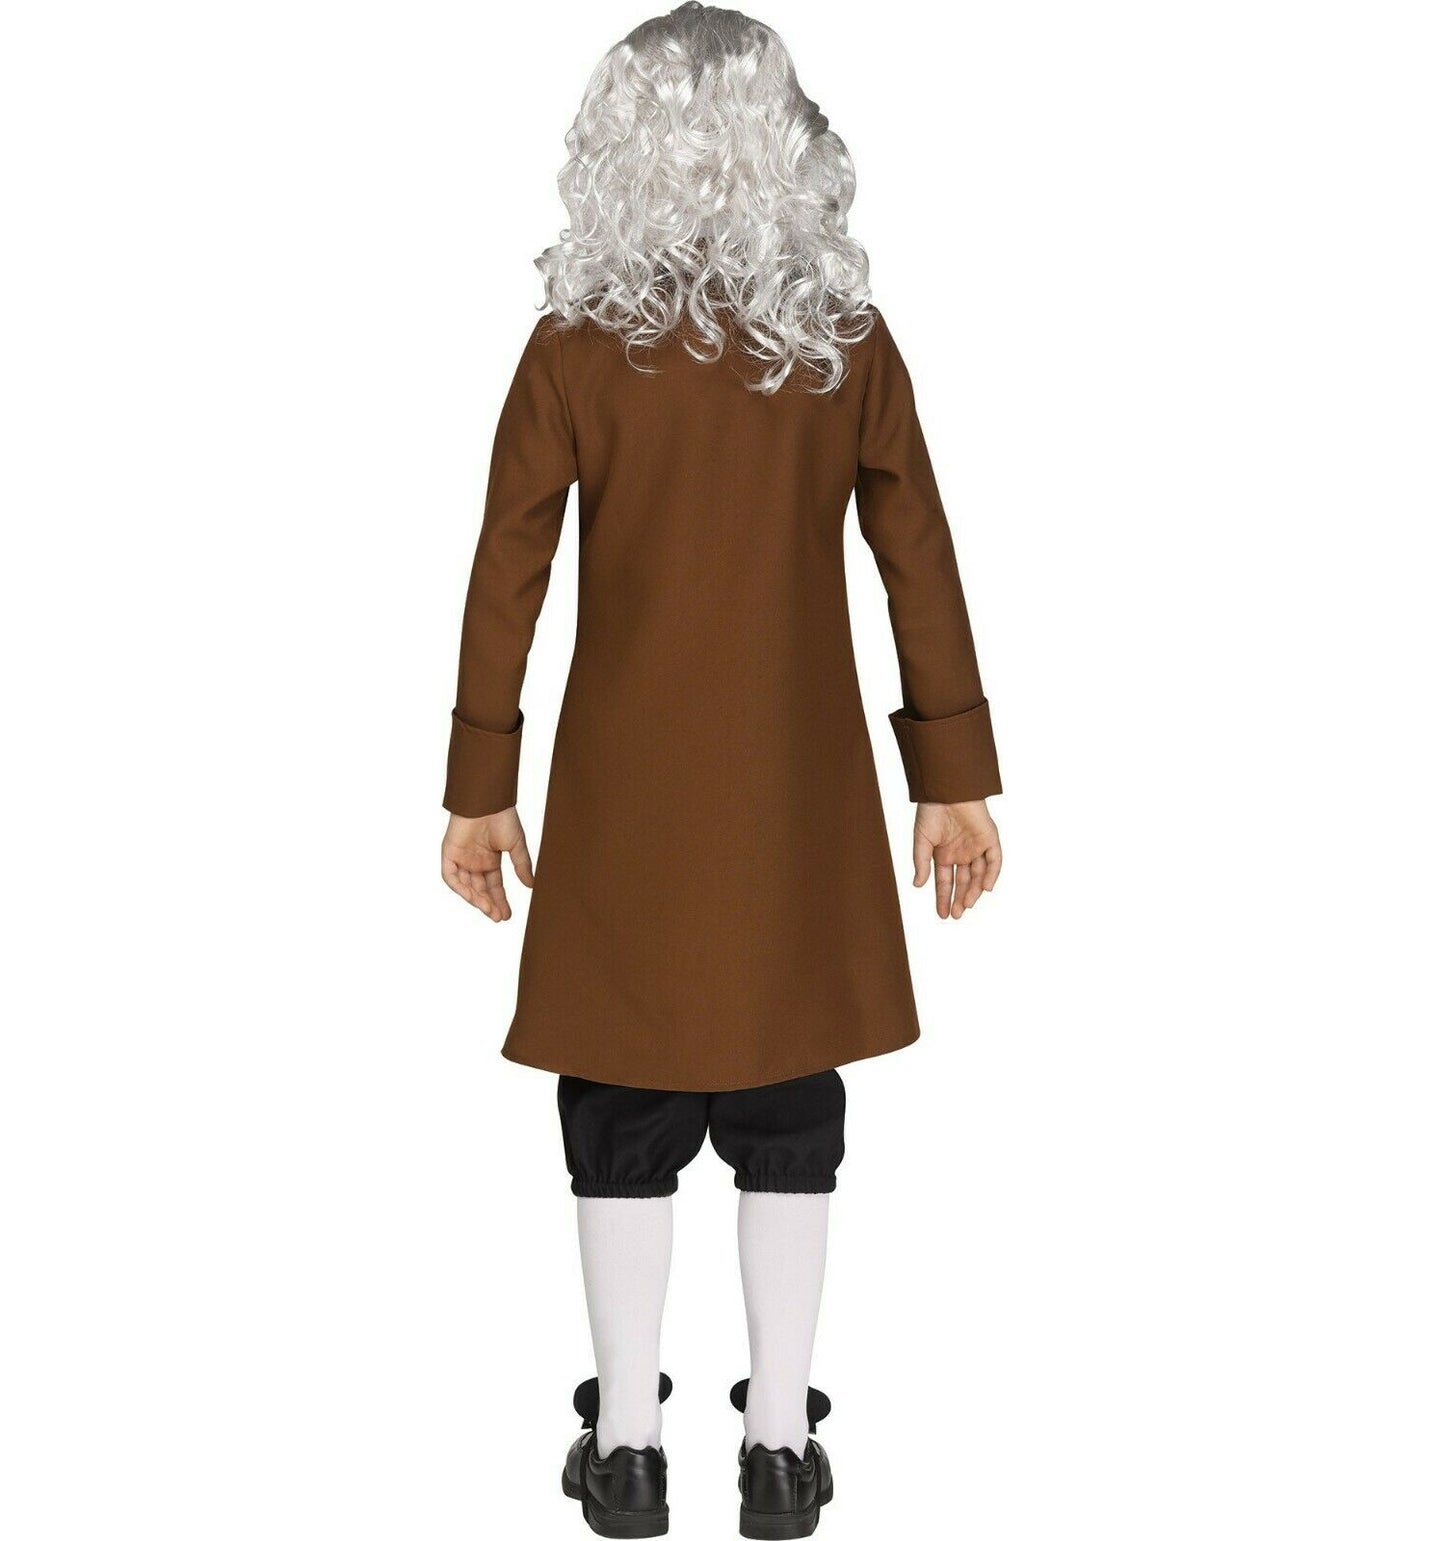 Benjamin Ben Franklin Historical Child Costume